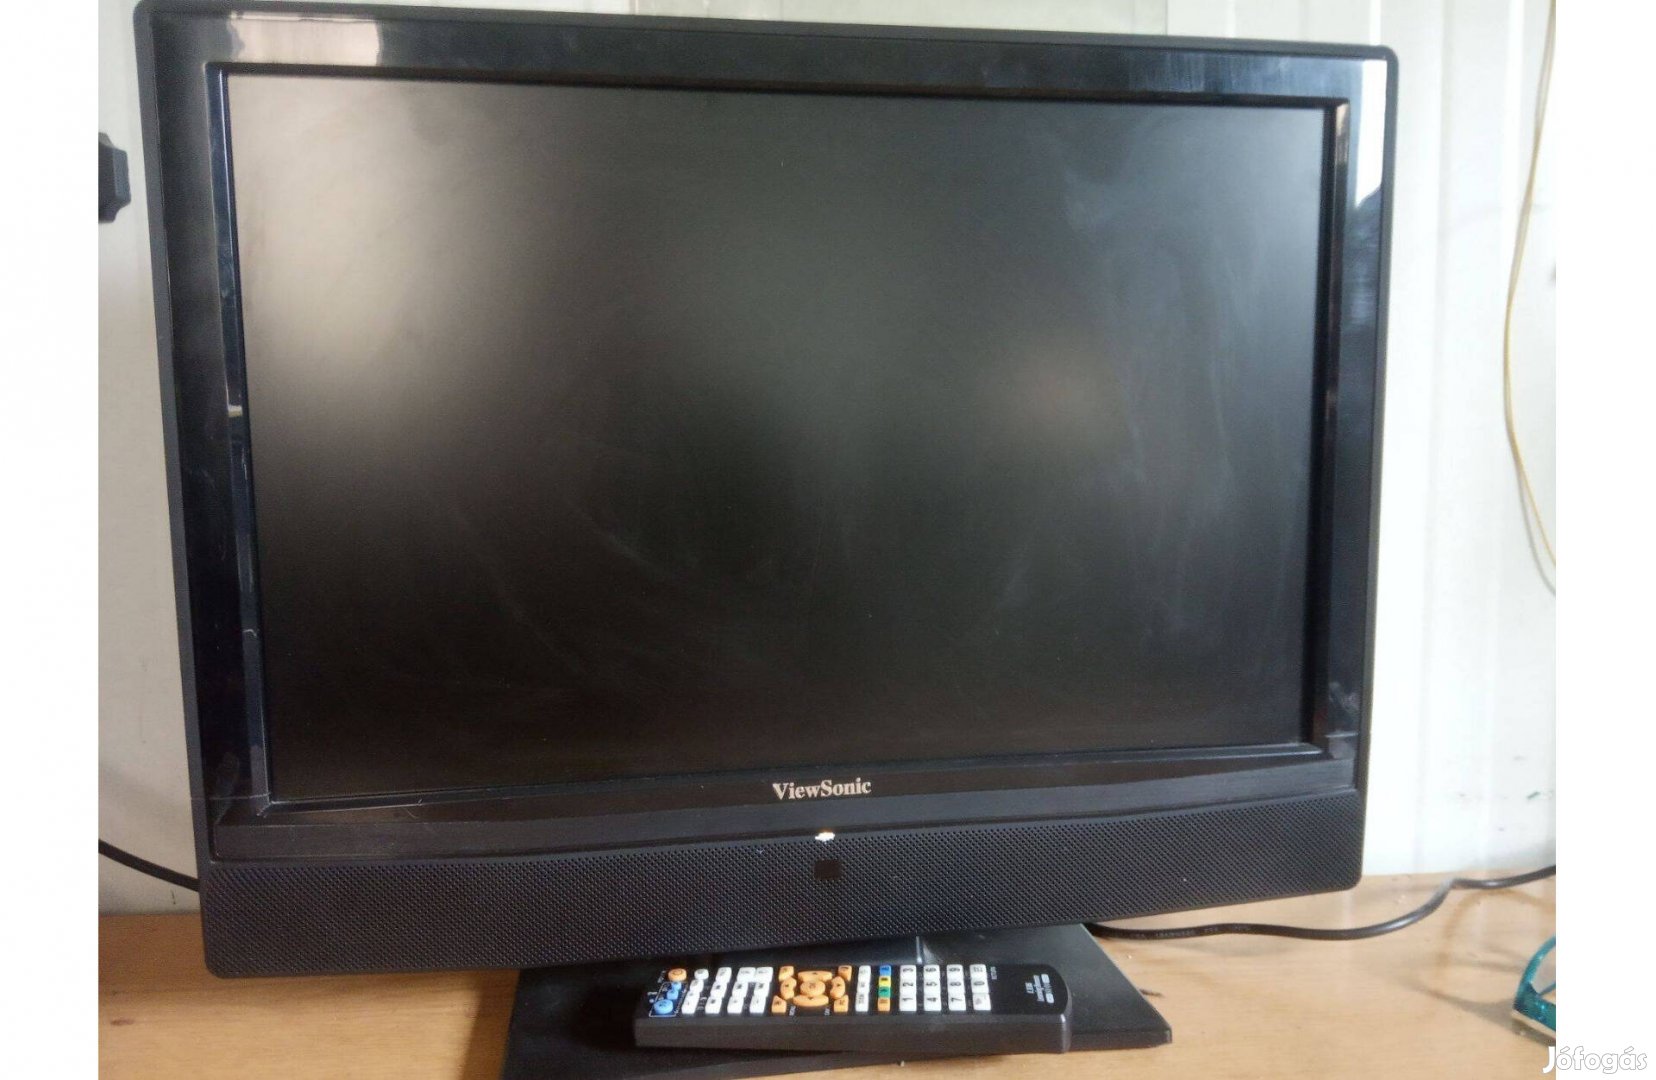 Viewsonic 22"-os(54cm) kis lcd tv-monitor garanciával eladó